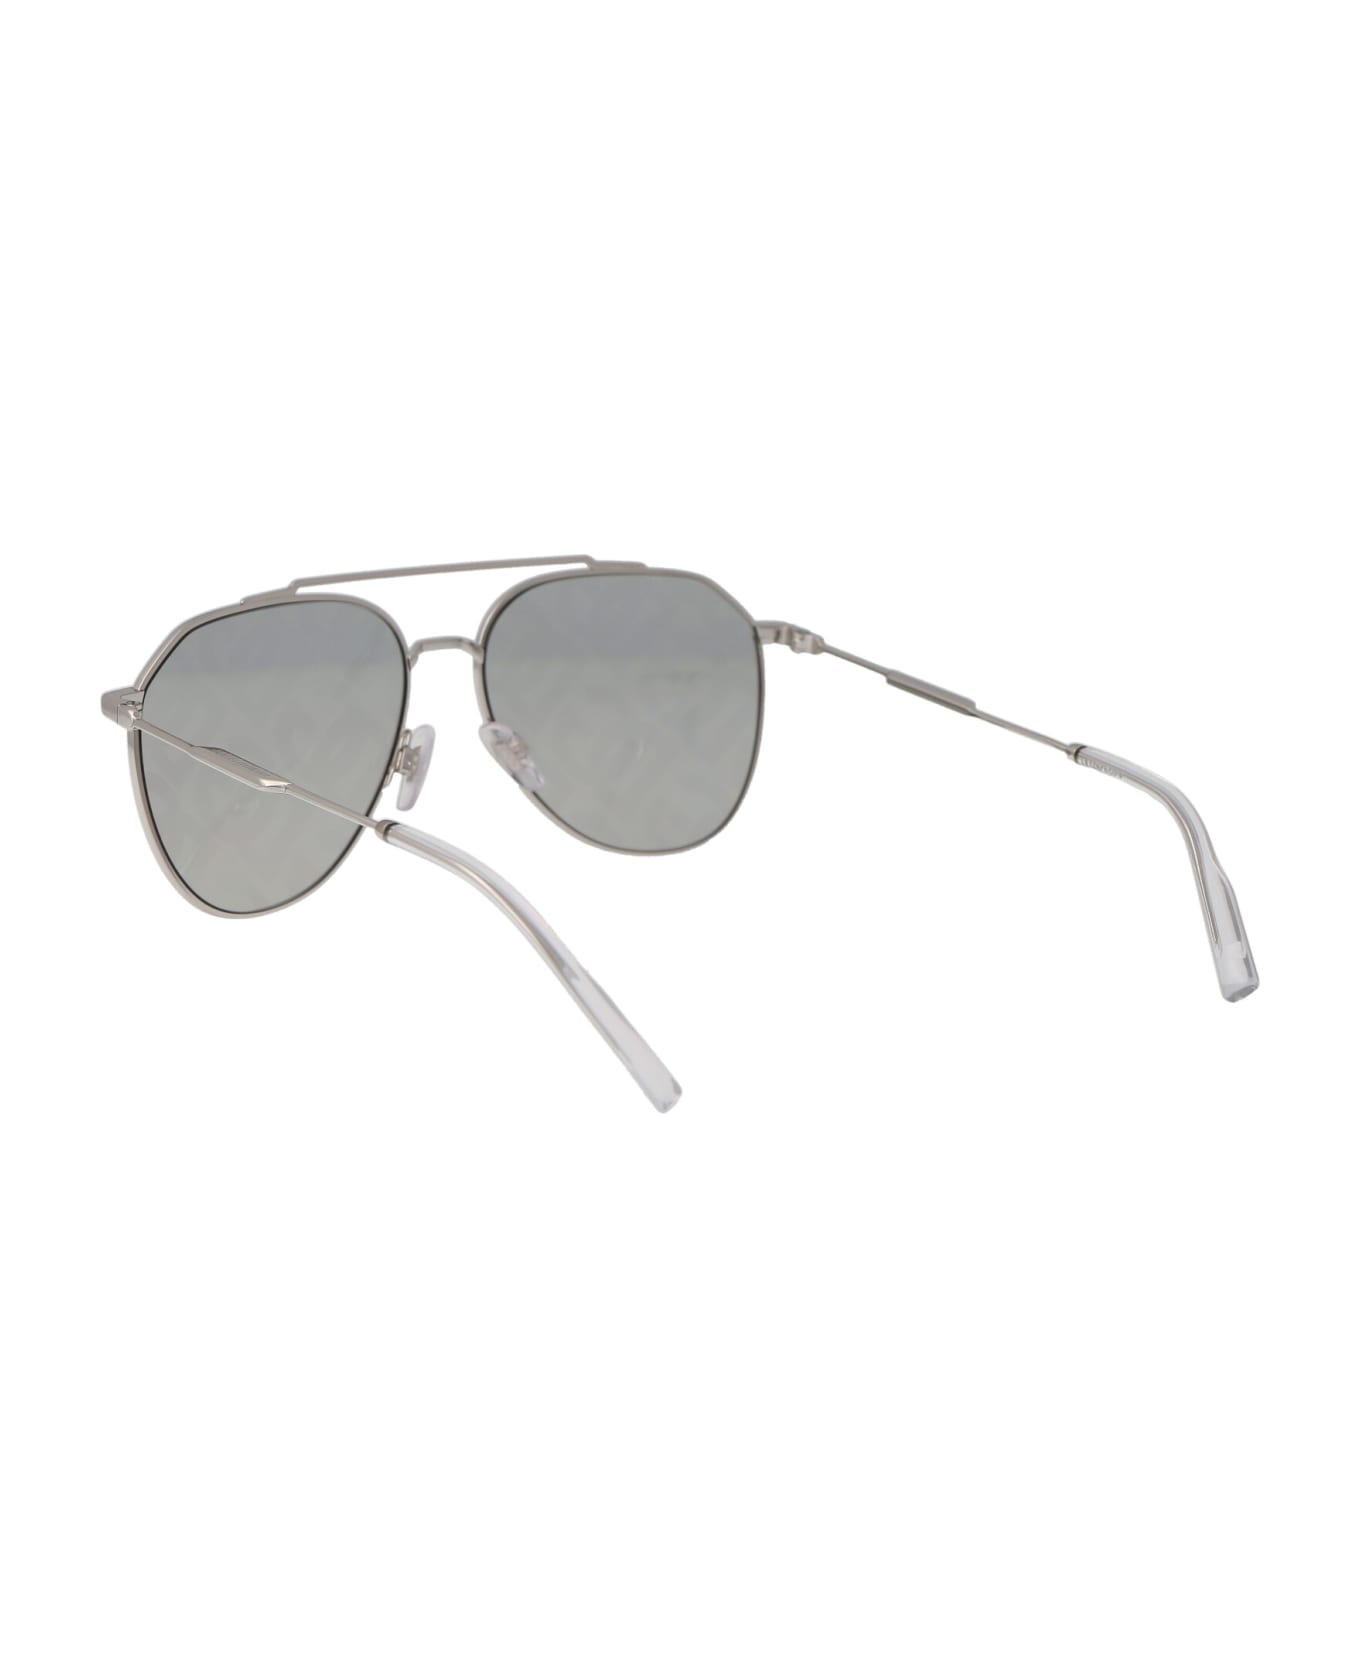 Dolce & Gabbana Eyewear 0dg2296 Sunglasses - 05/AL Silver